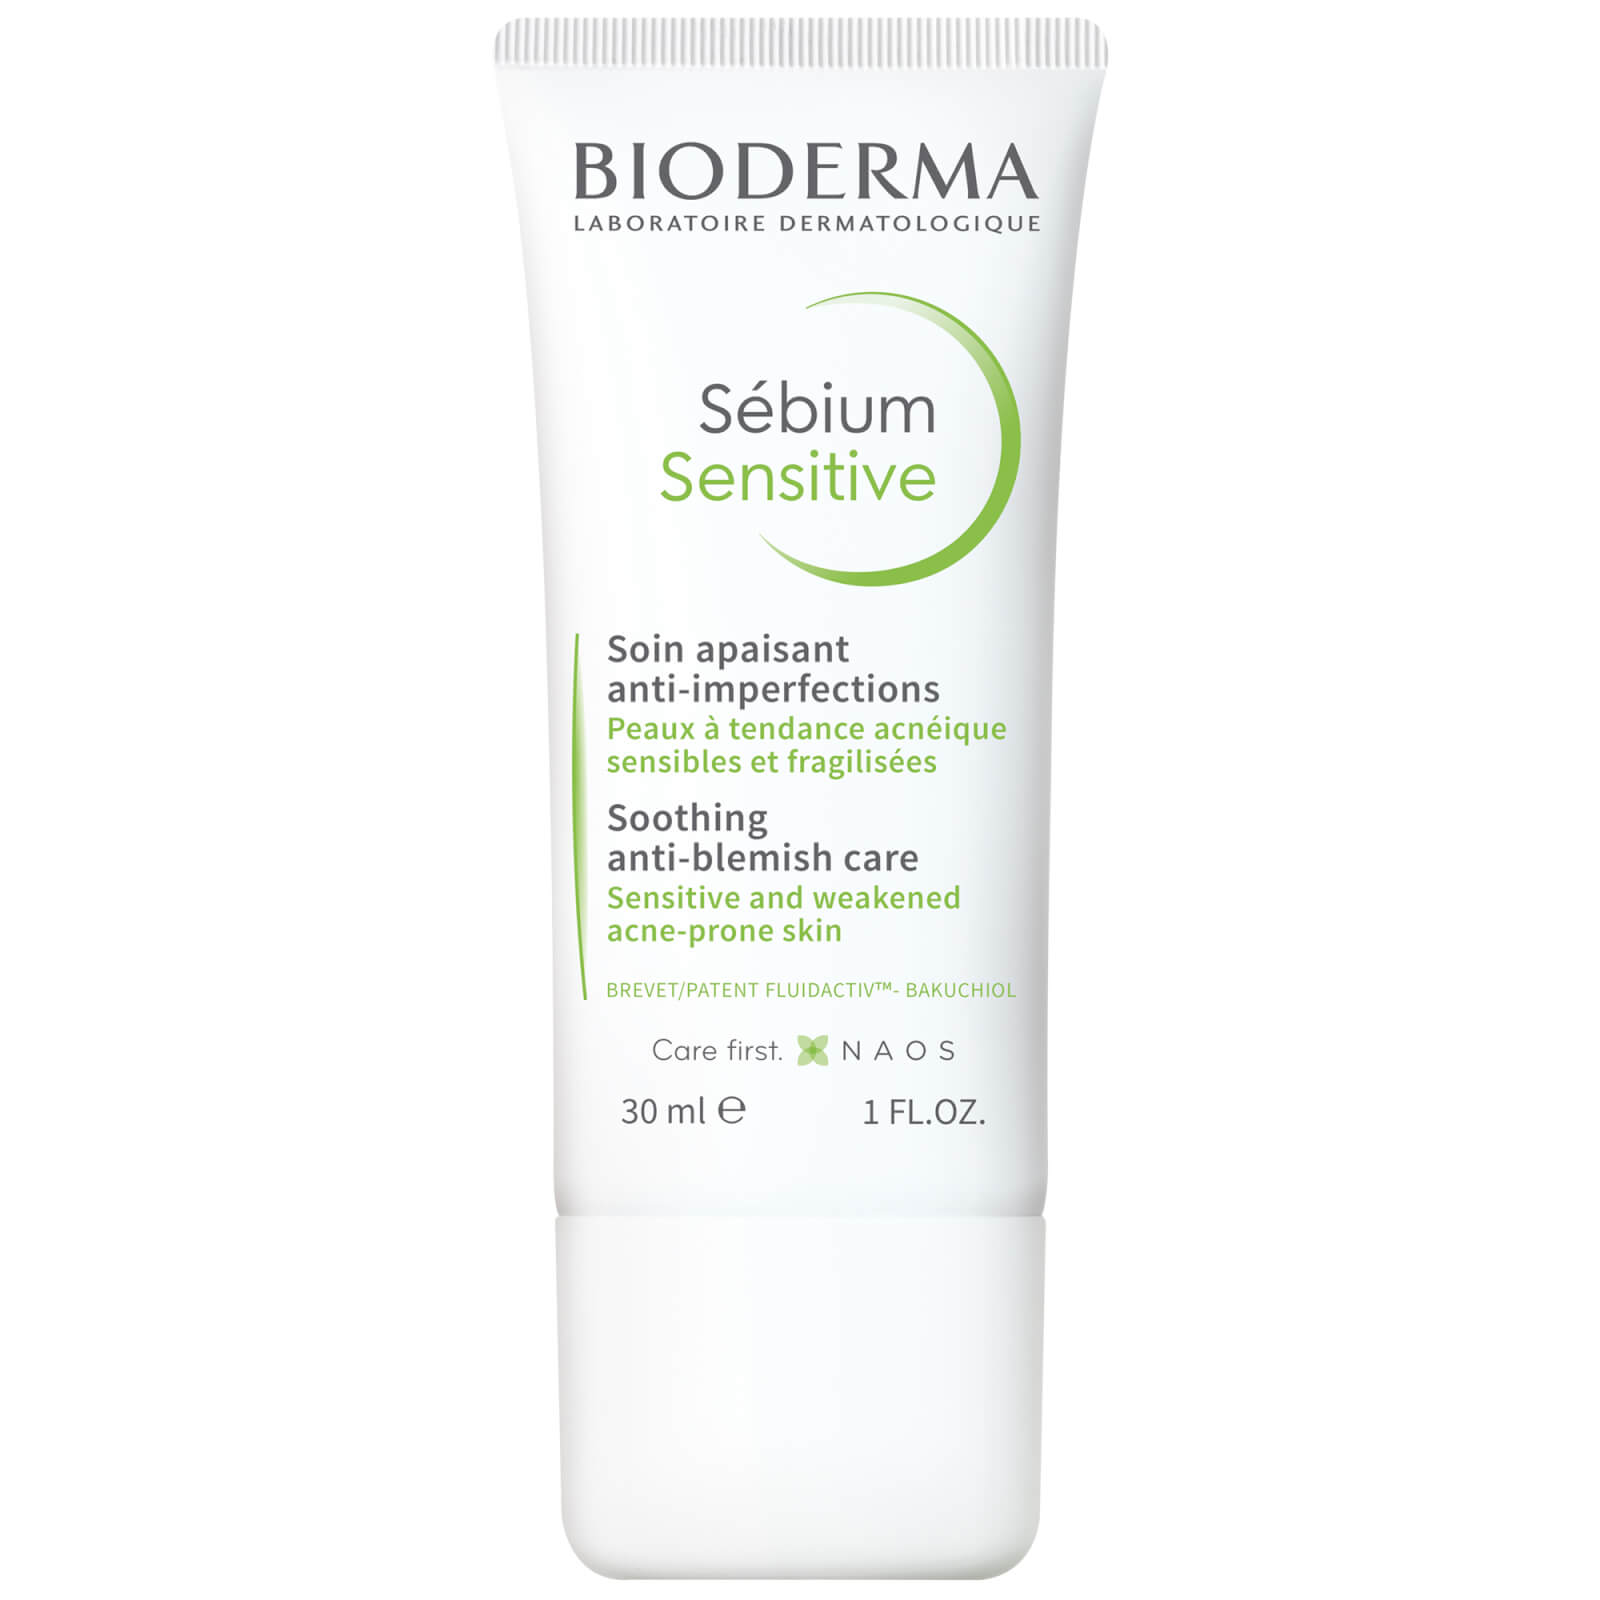 Bioderma Sebium Sensitive Soothing Moisturising Anti-Blemish Cream 30ml